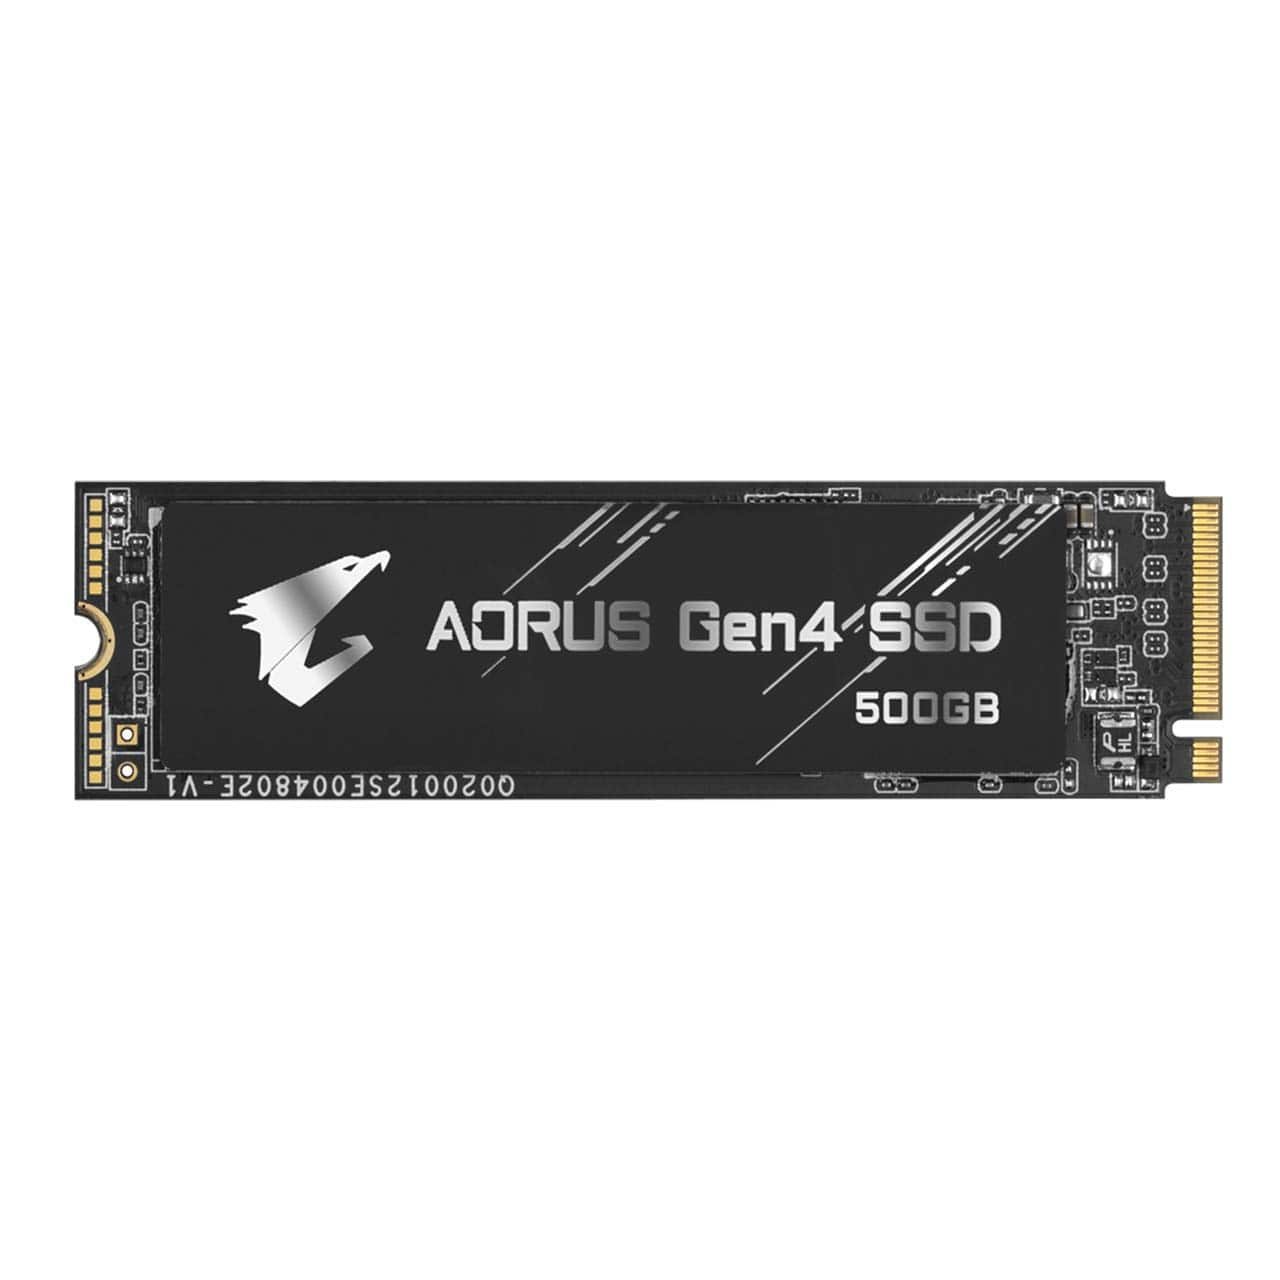 gigabyte AORUS Gen4 SSD sele.shop p1-min